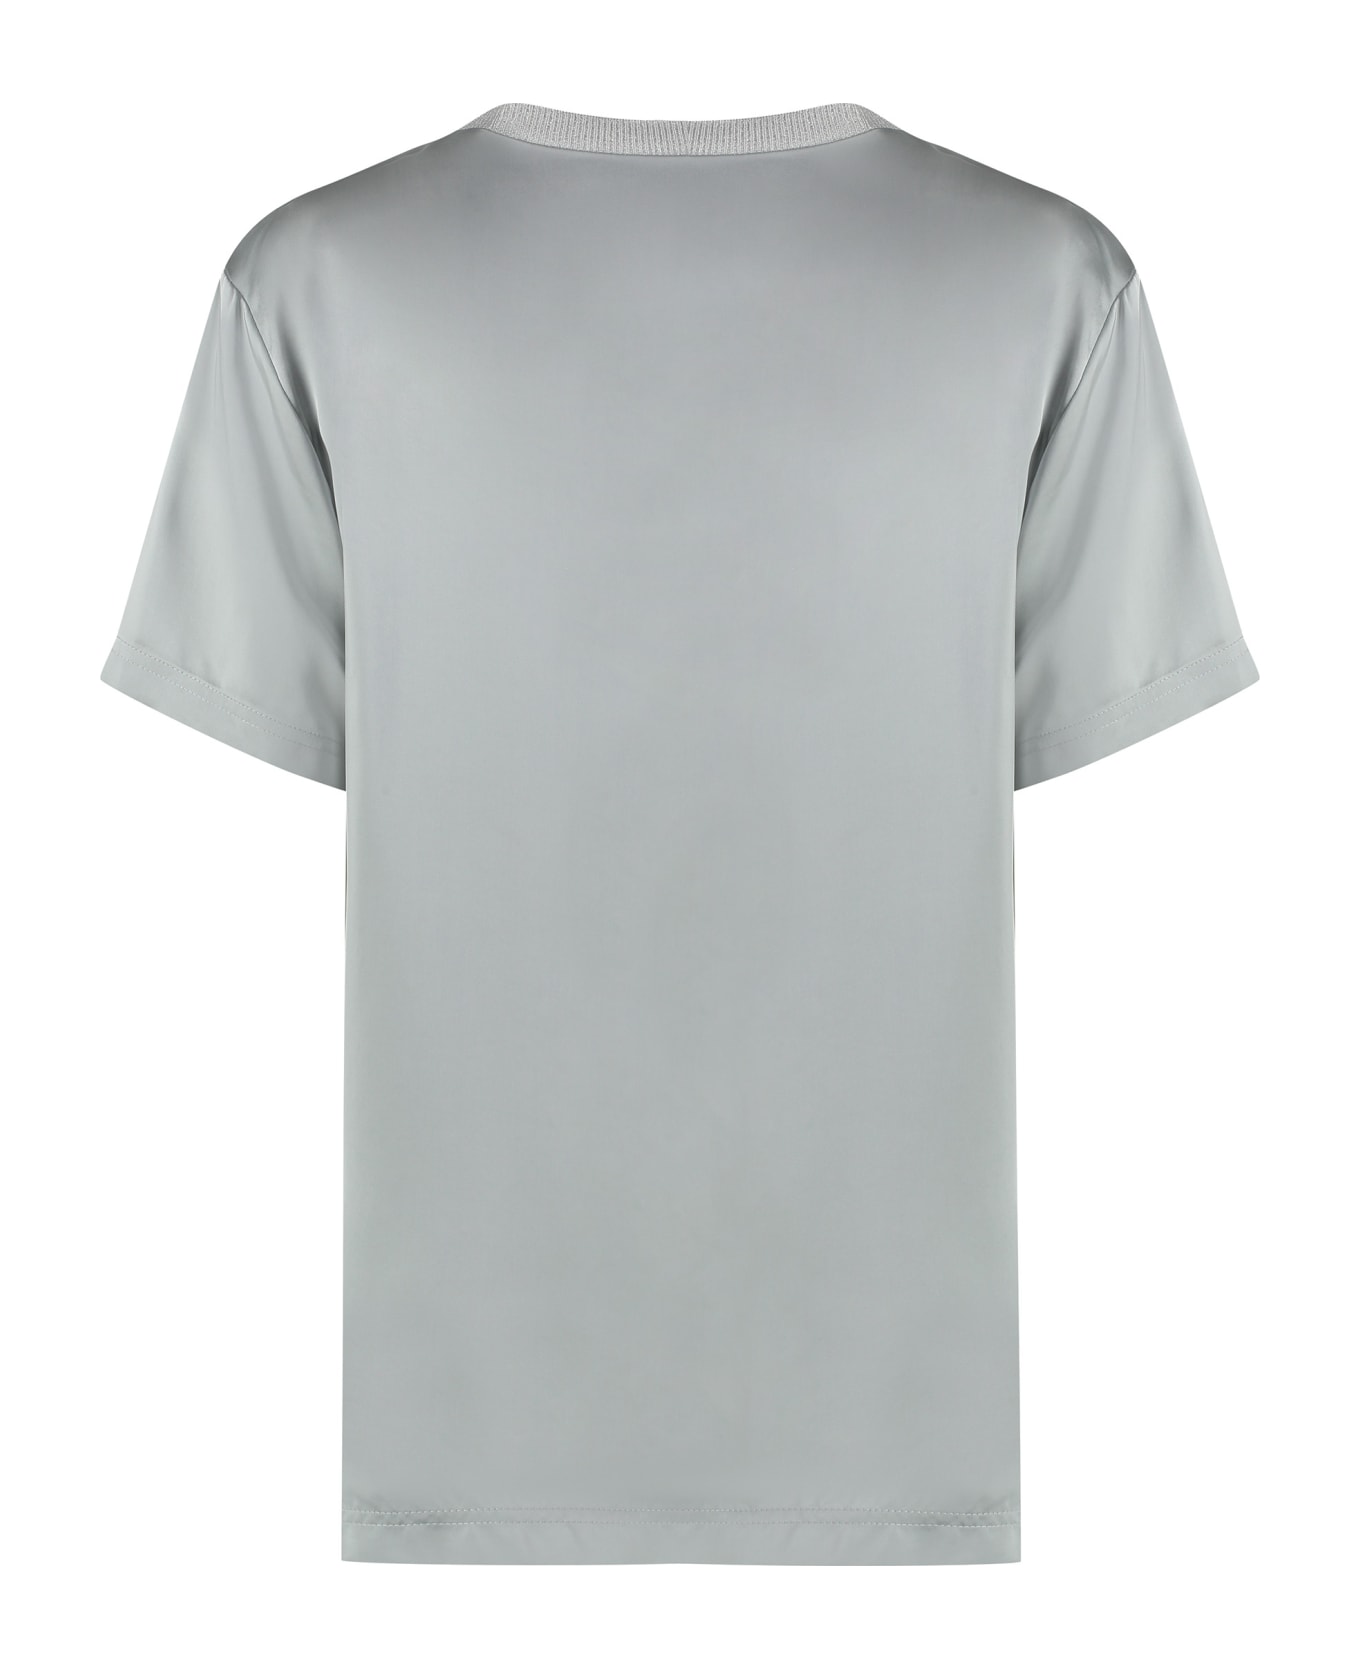 Fabiana Filippi Viscose Top - grey Tシャツ